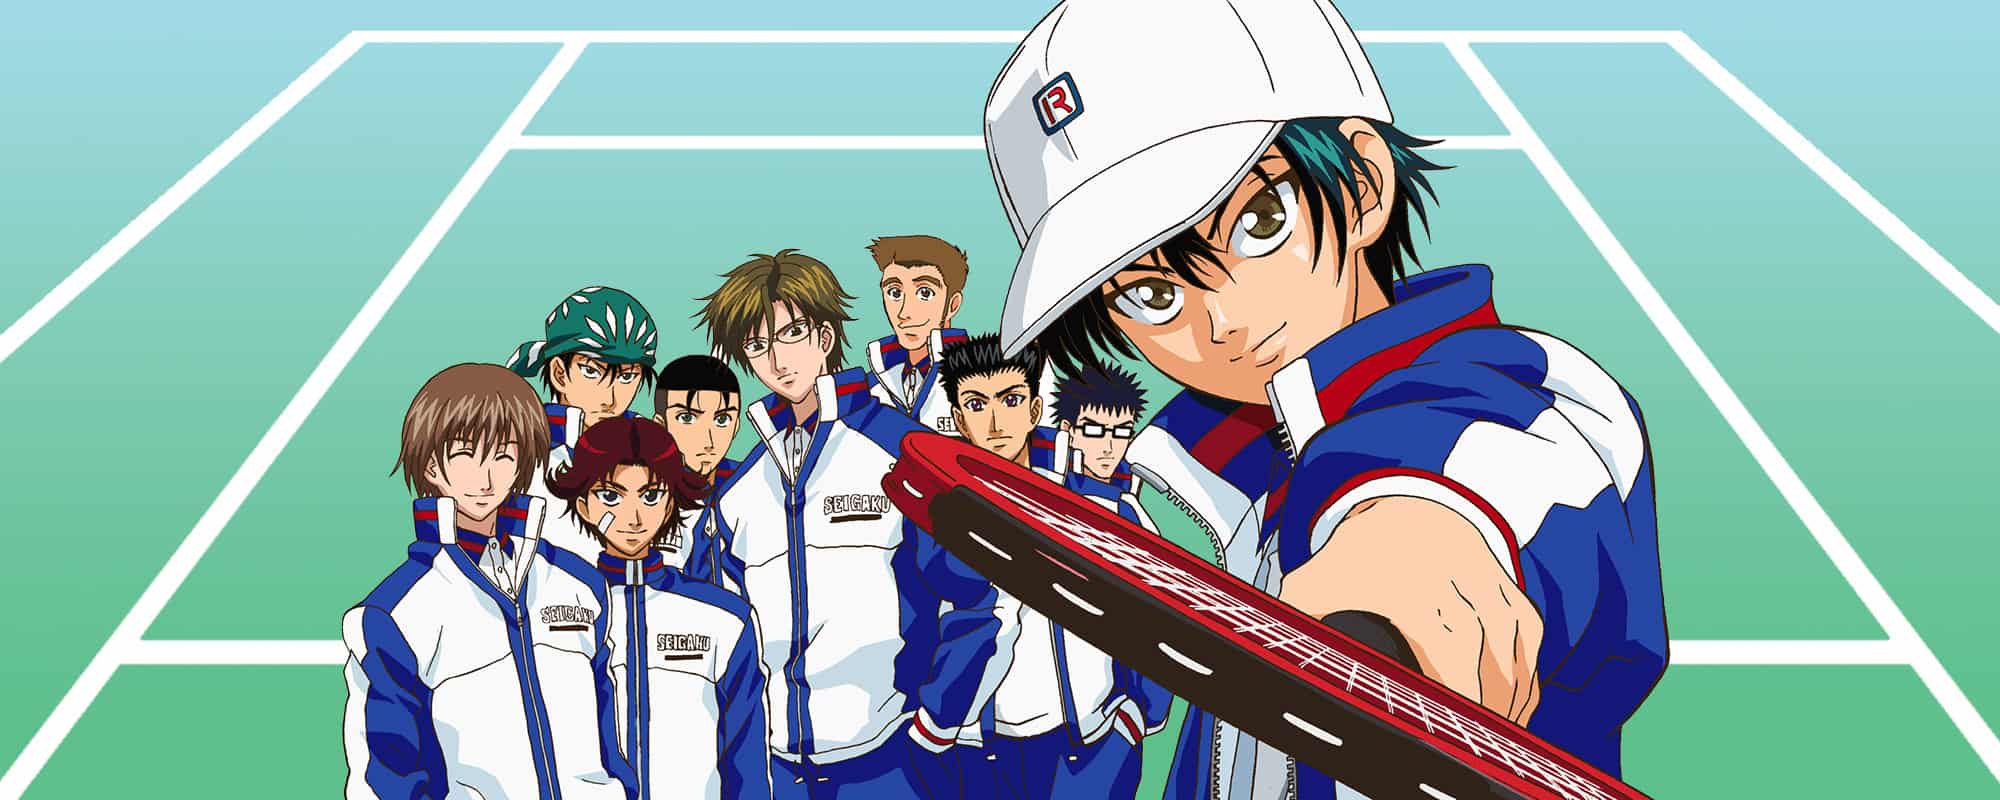 Prince of Tennis, anime series